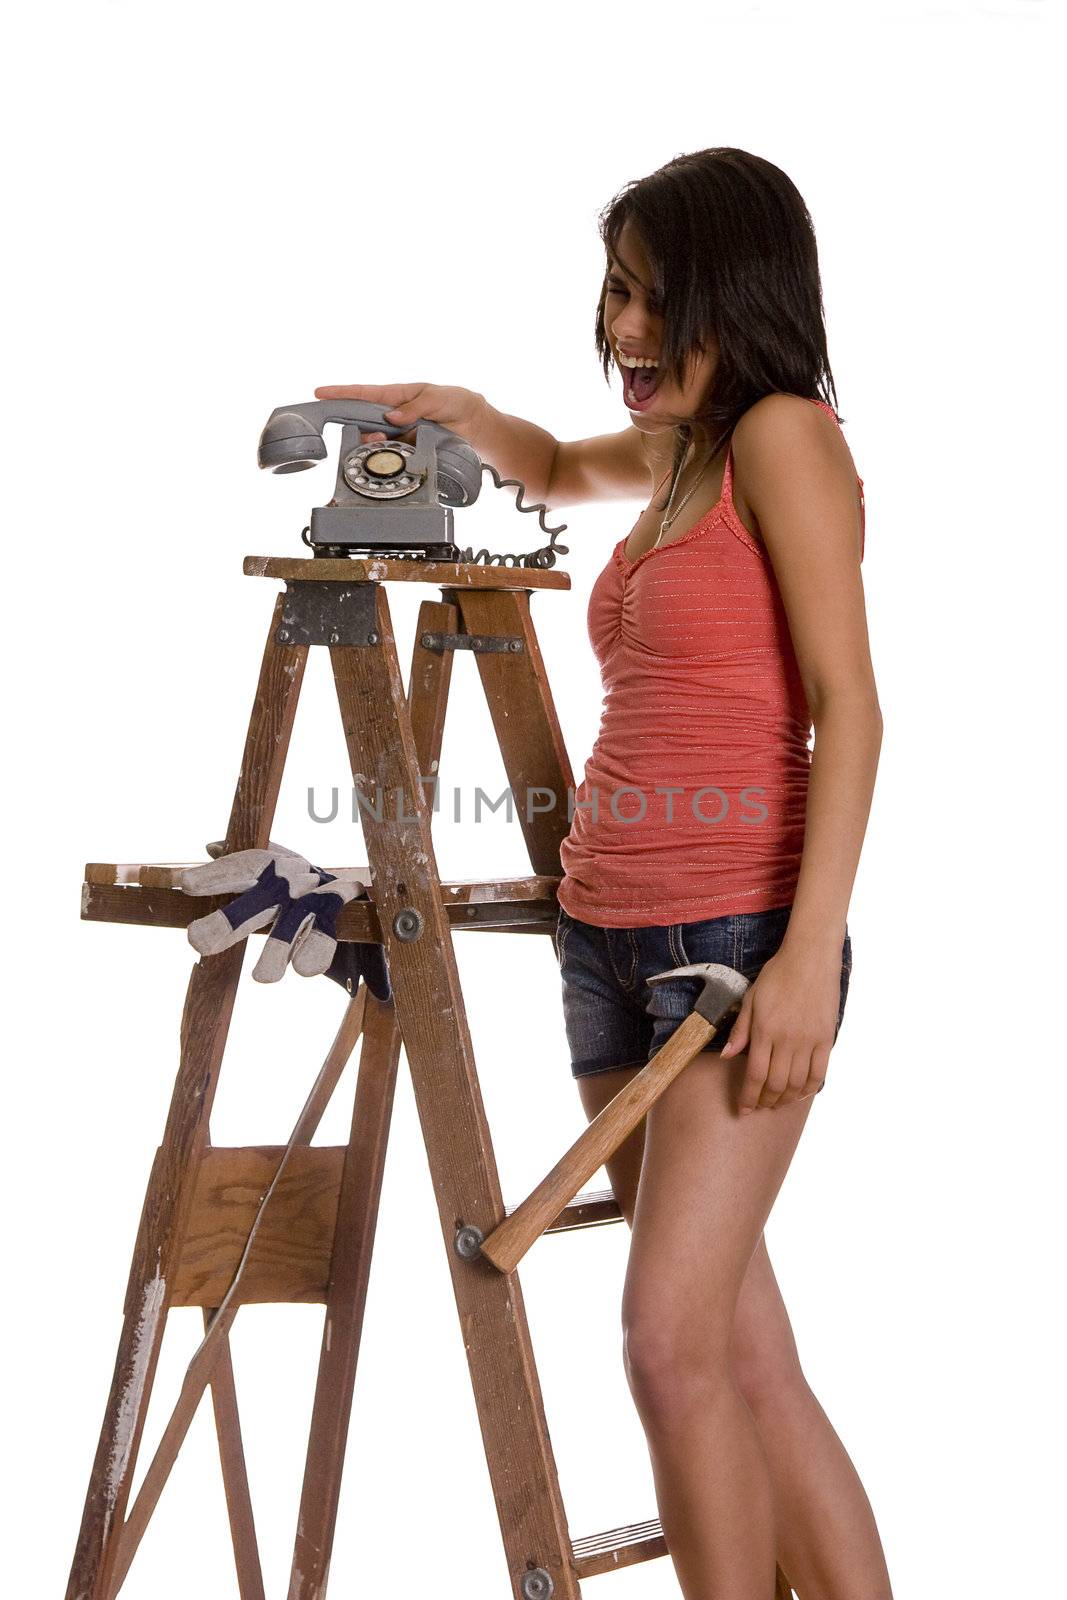 teenage girl standing on ladder screaming while slamming an old rotary phone